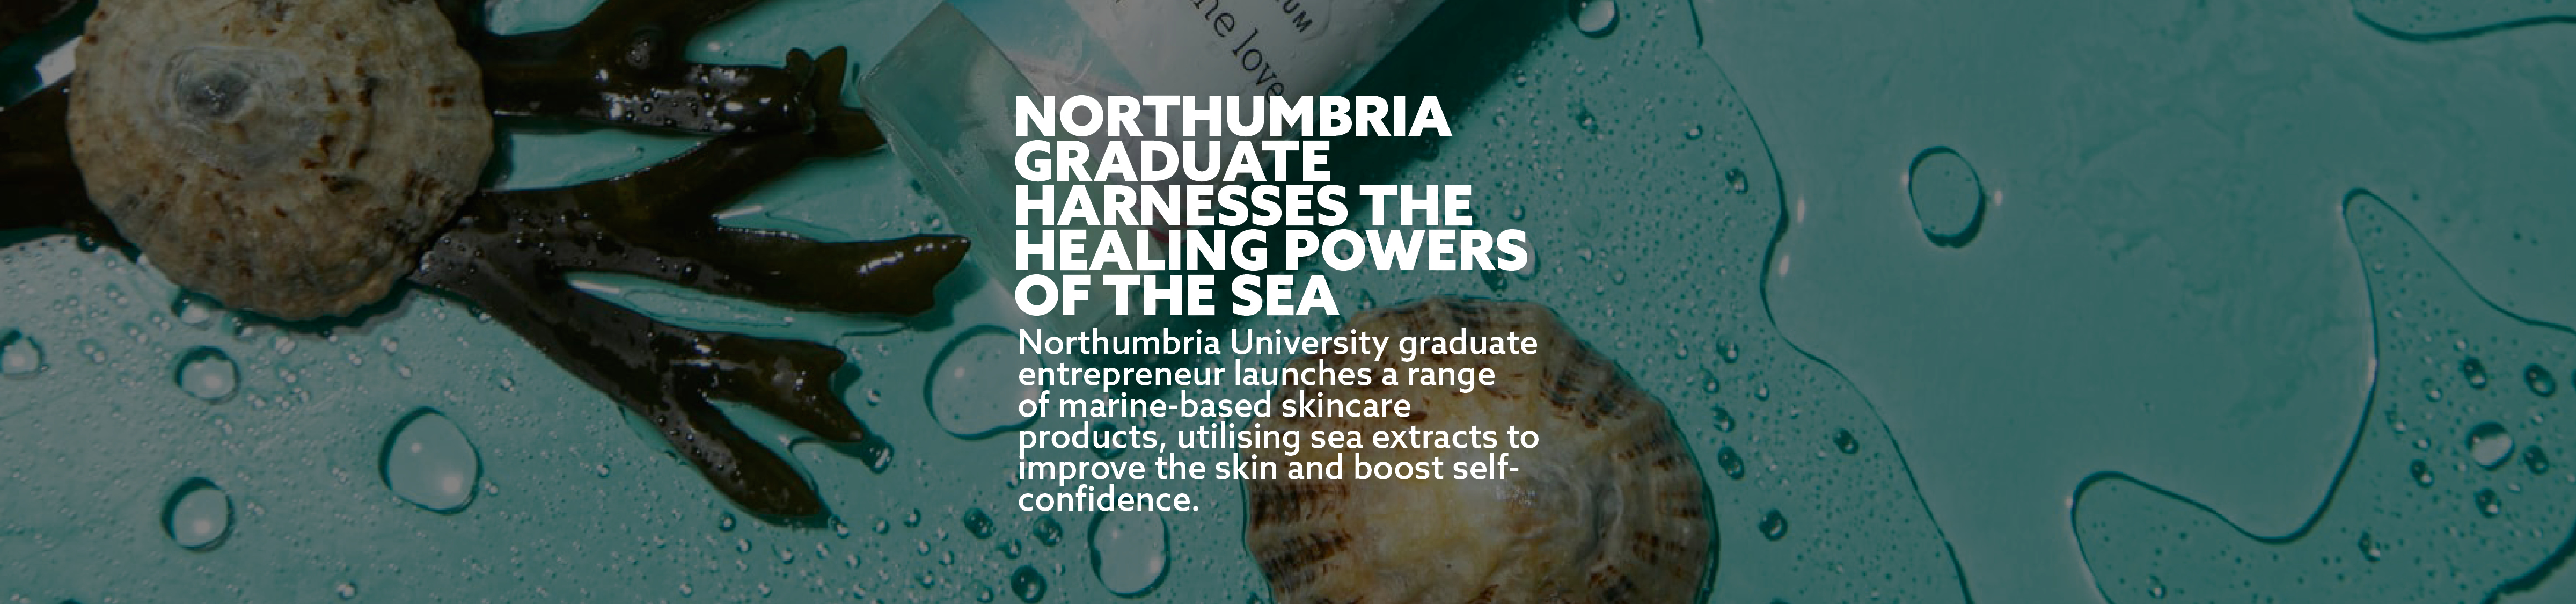 Northumbria graduate harnesses the healing powers of the sea